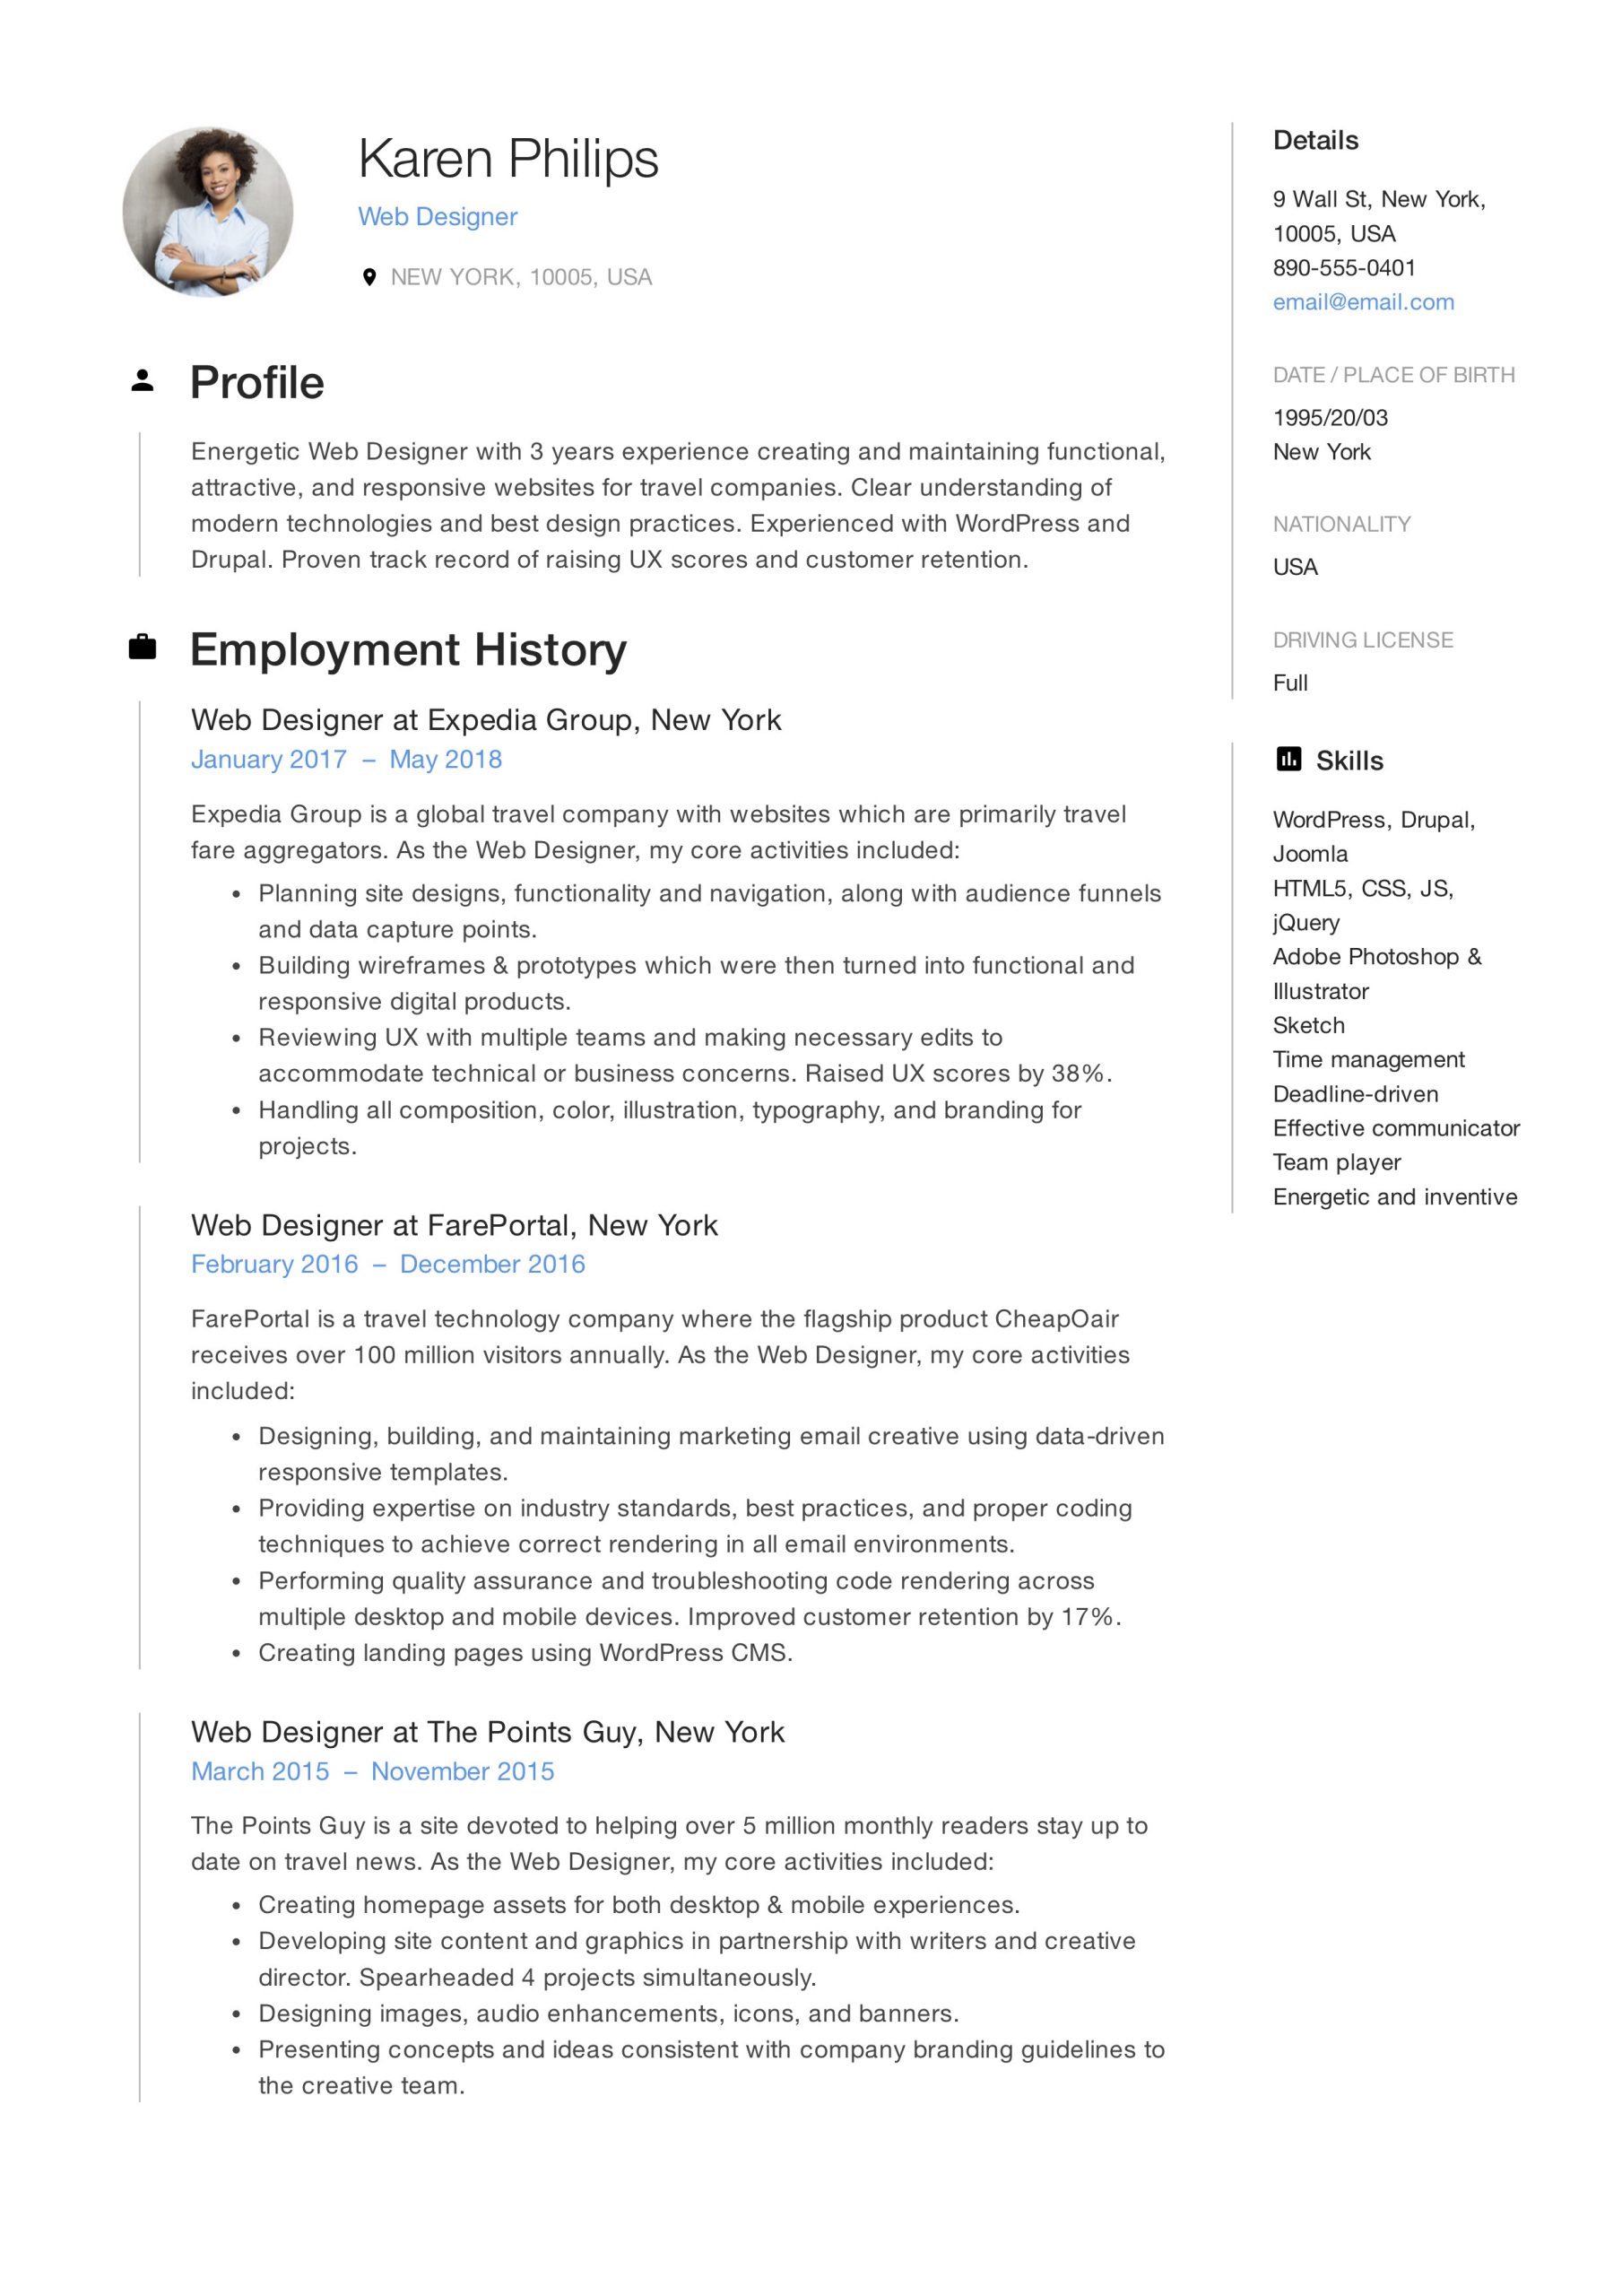 Sample Resume for Web Developer Interview 19 Free Web Designer Resume Examples & Guide Pdf 2020